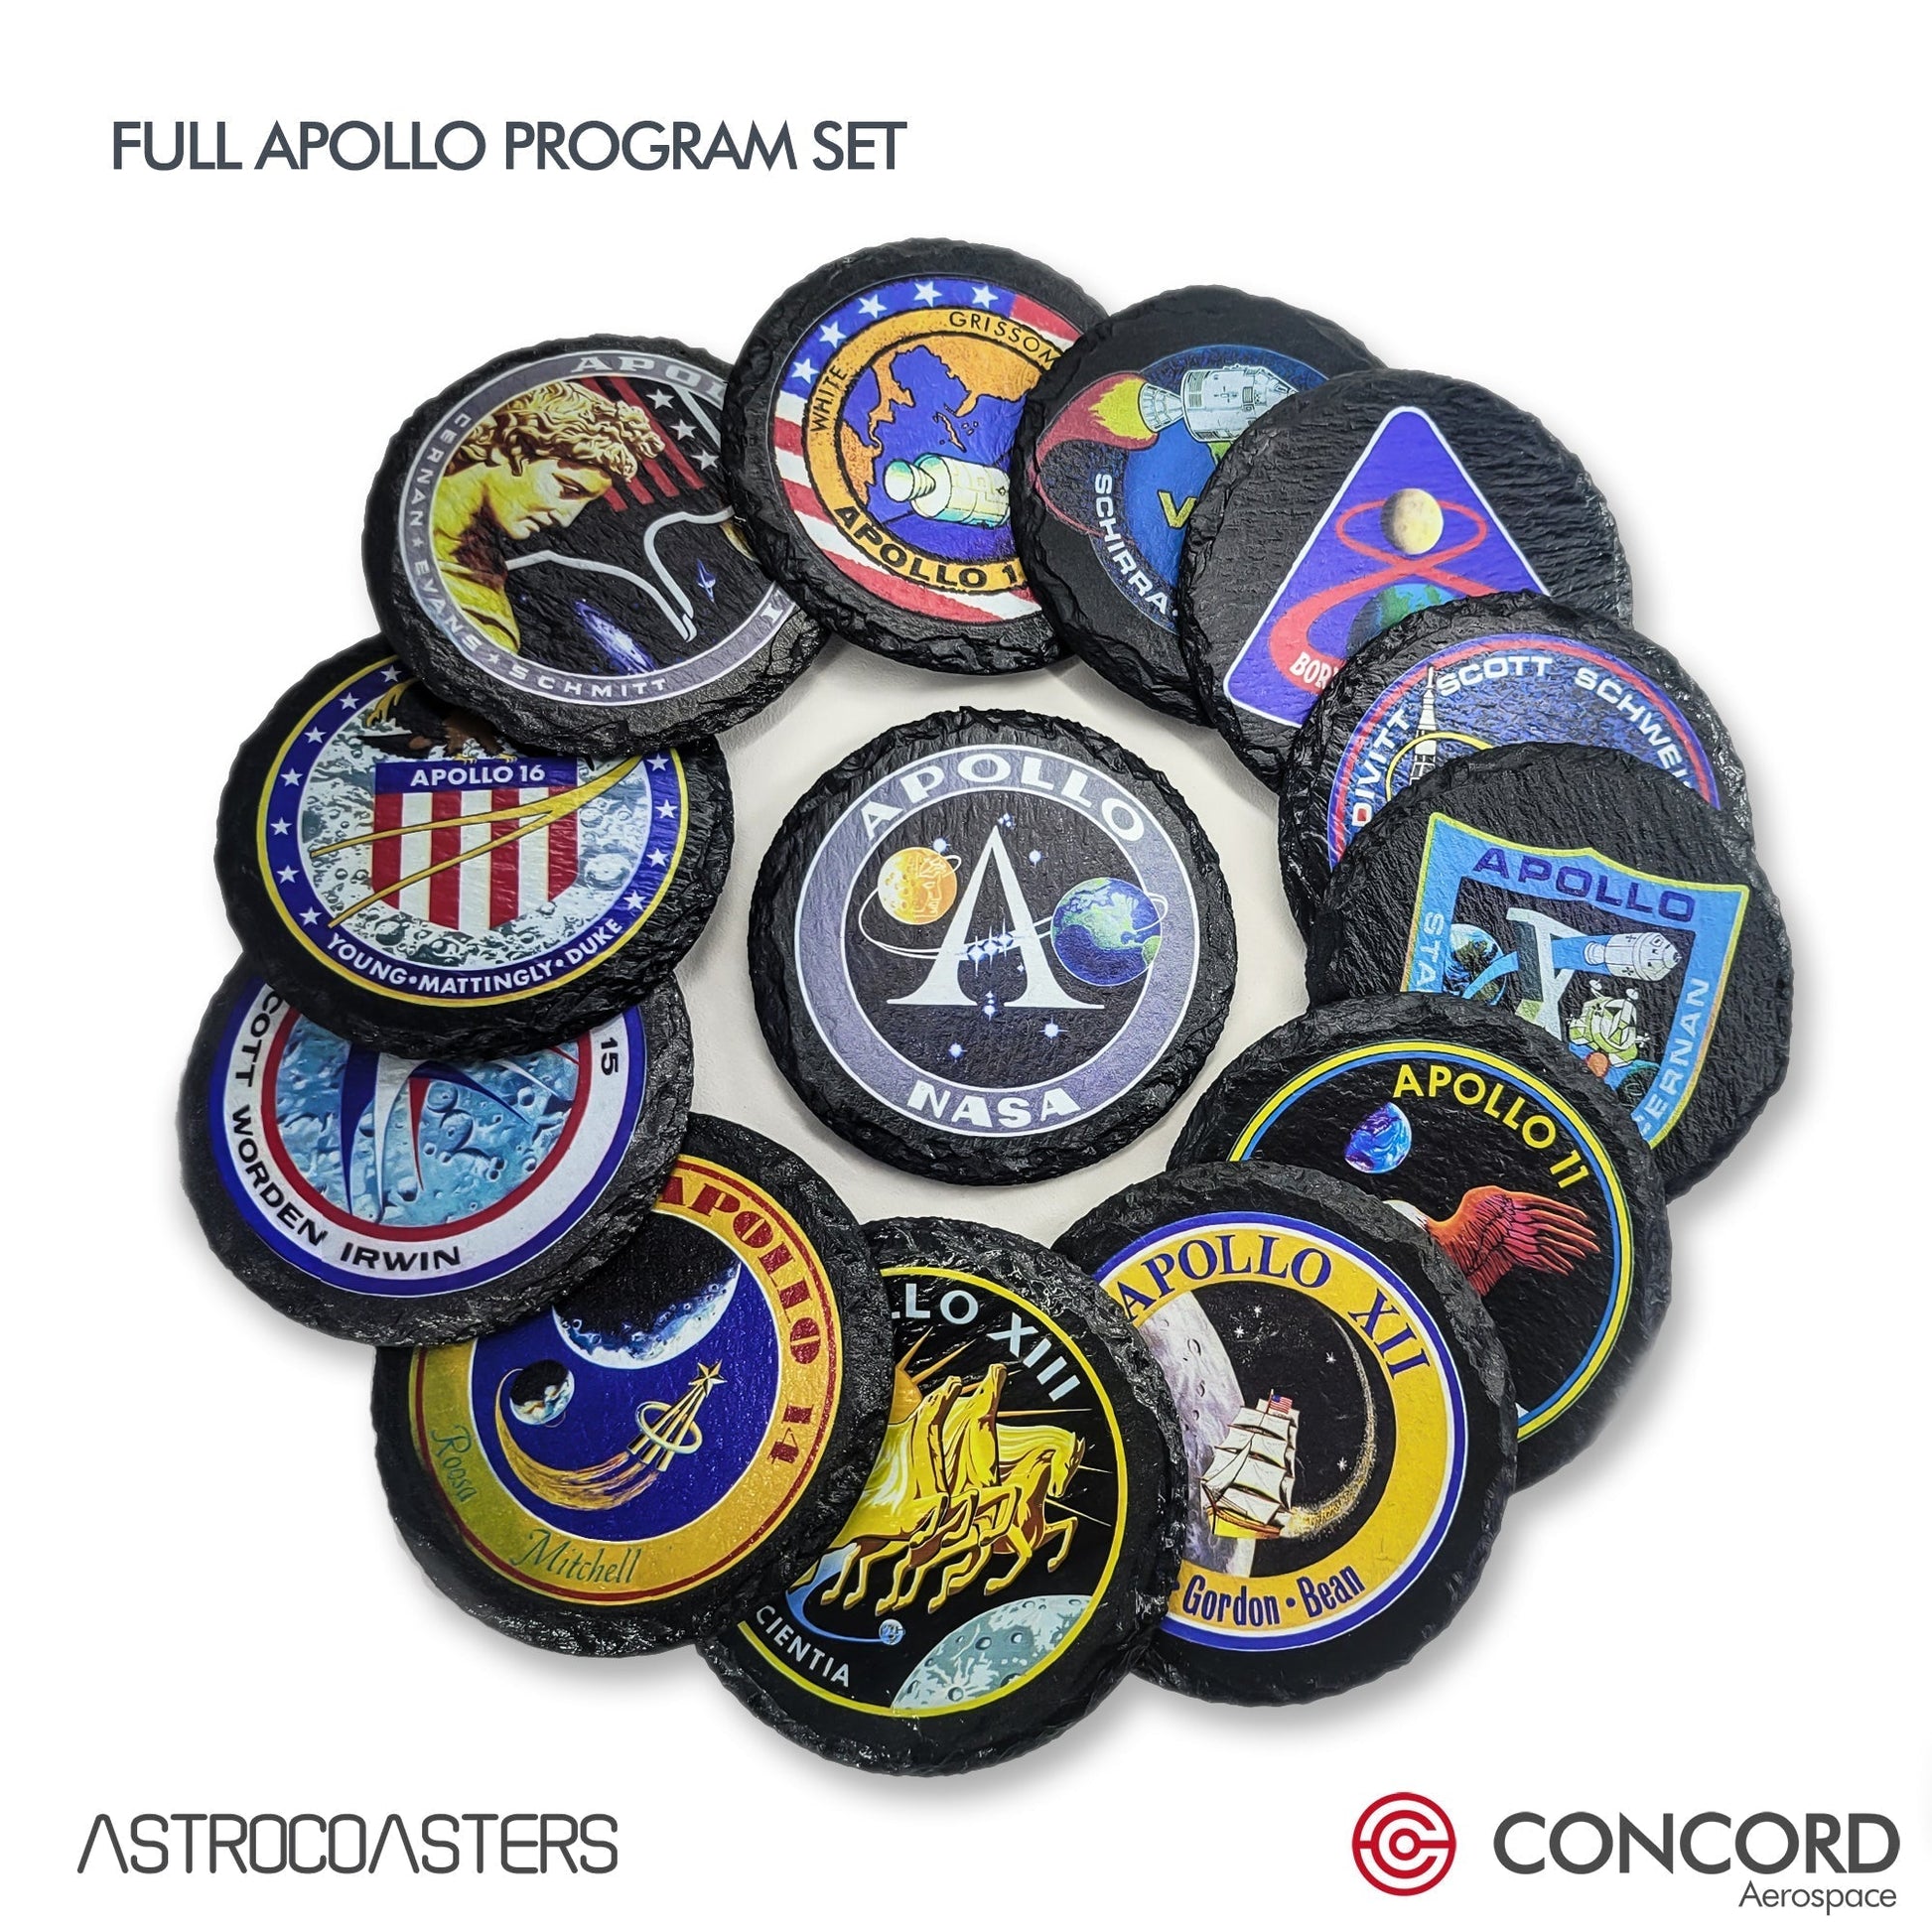 SKYLAB I - SLATE COASTER - Concord Aerospace Concord Aerospace Concord Aerospace Coasters